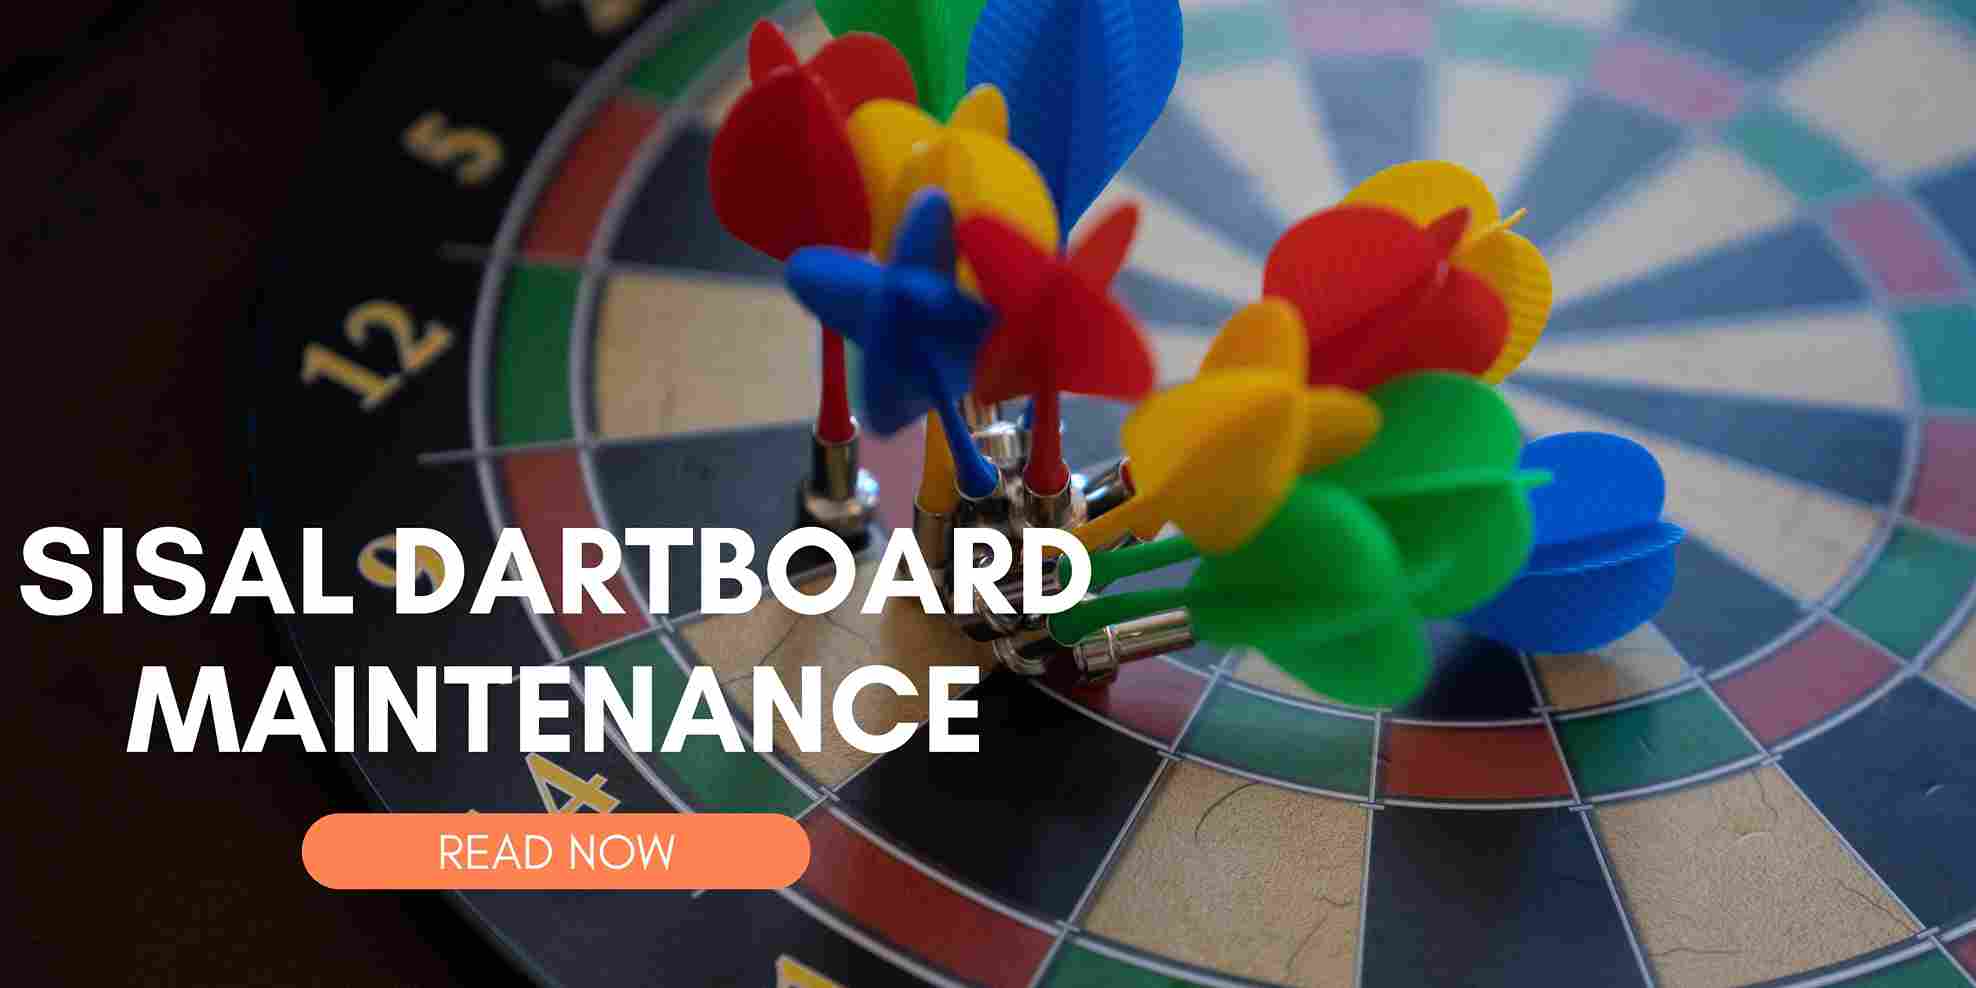 Sisal dartboard maintenance